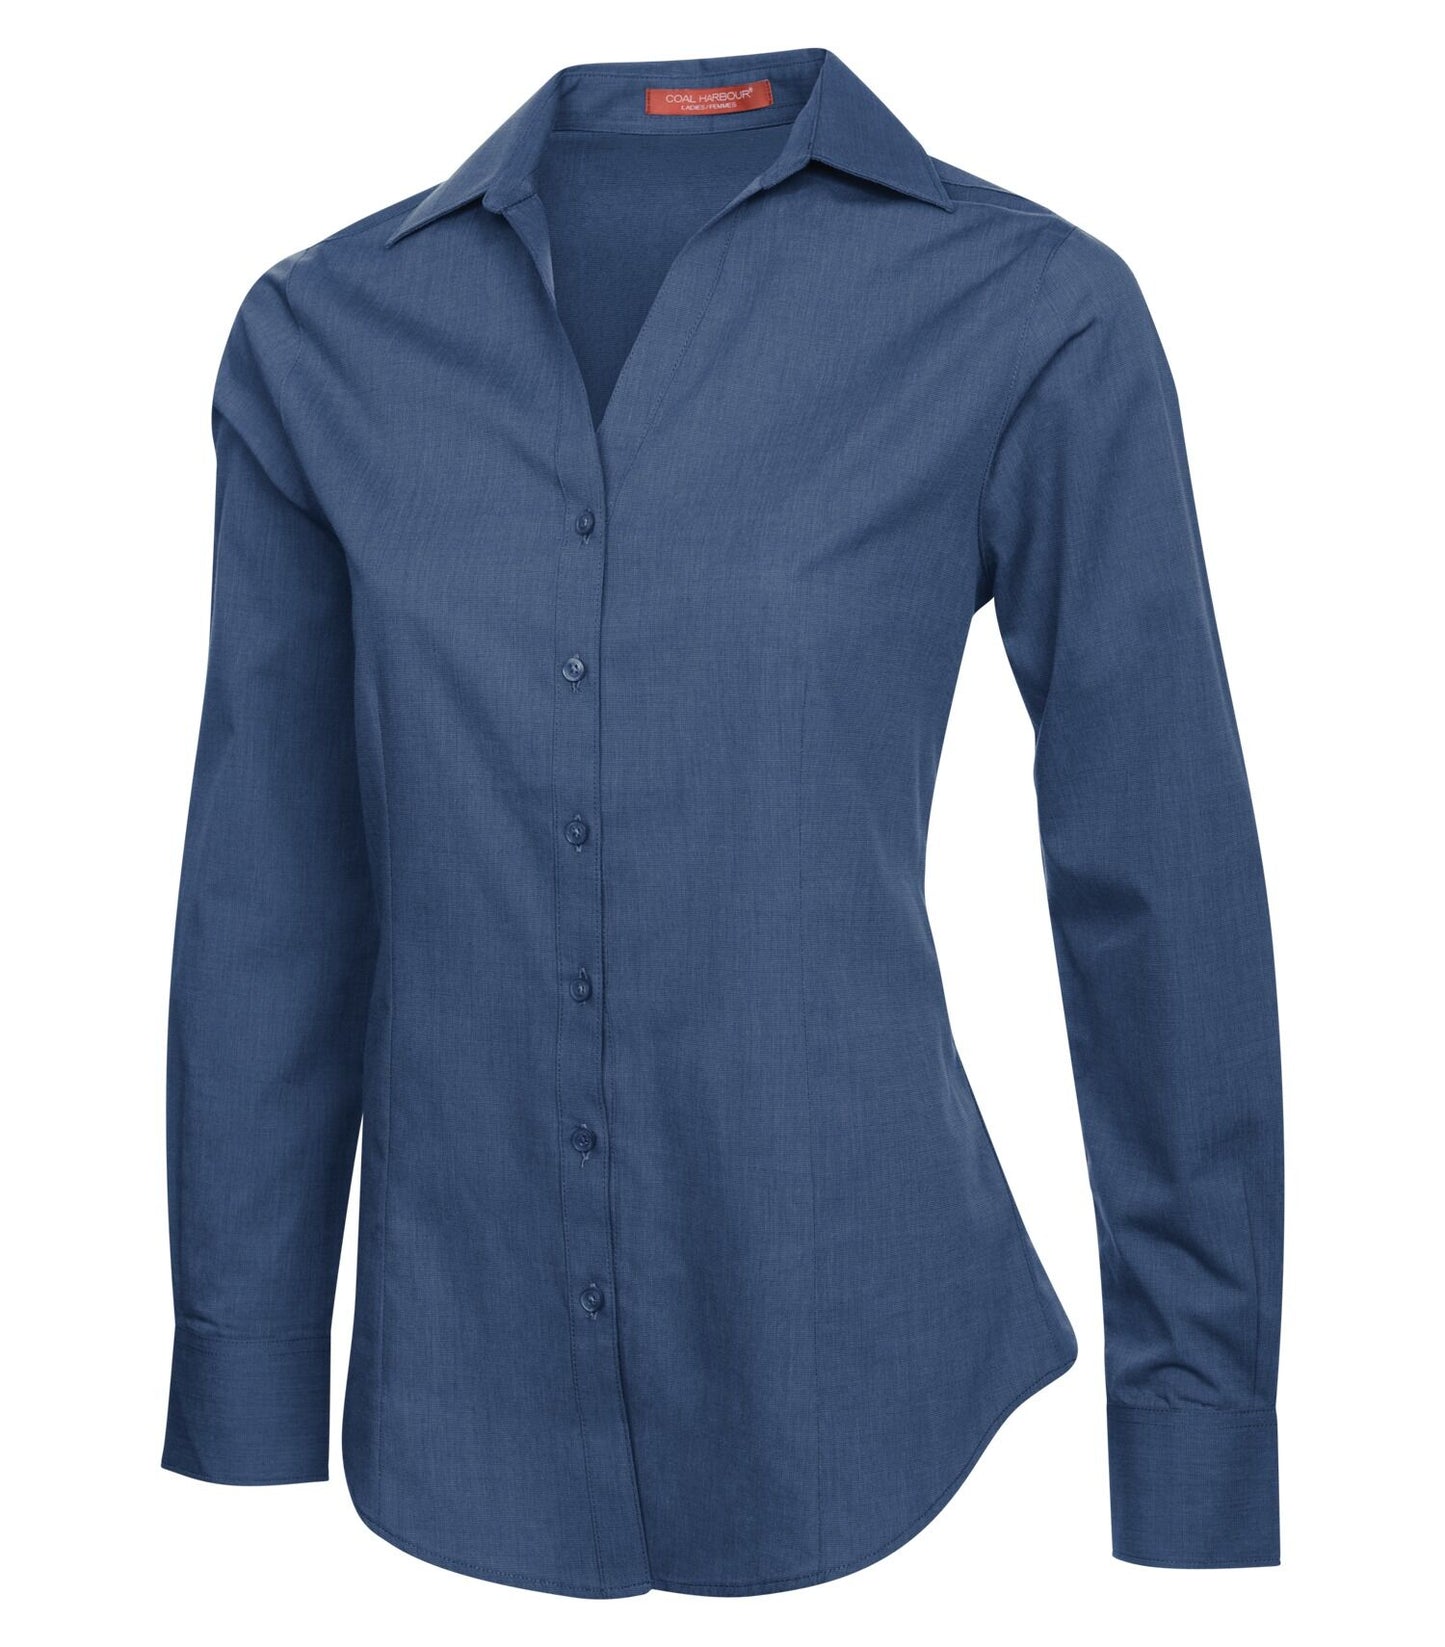 Coal Harbor-L6004 Women's Textured Woven Shirt